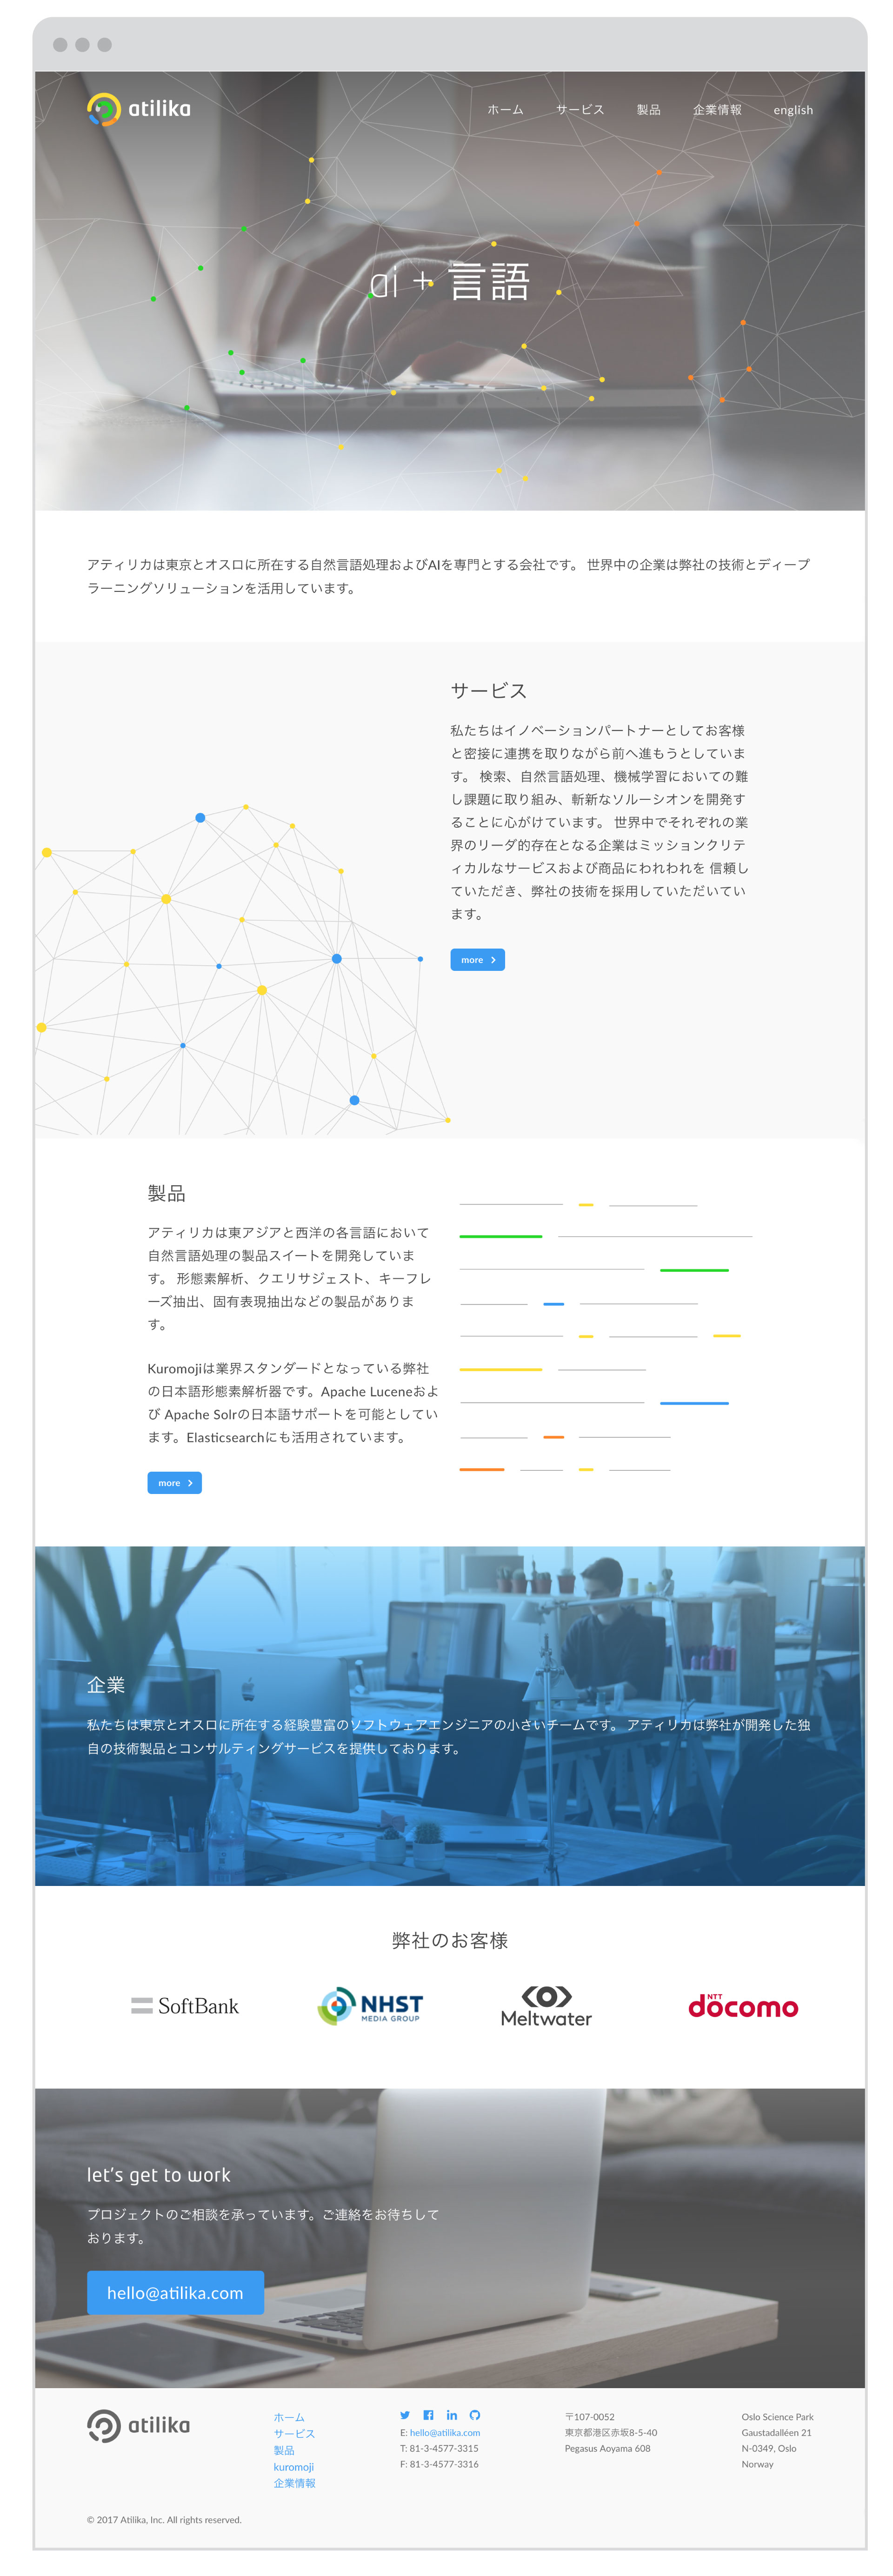 Atilika Tokyo Japan - ai artificial intelligence & language processing - Logo, Corporate Identity Design and Website UI Design